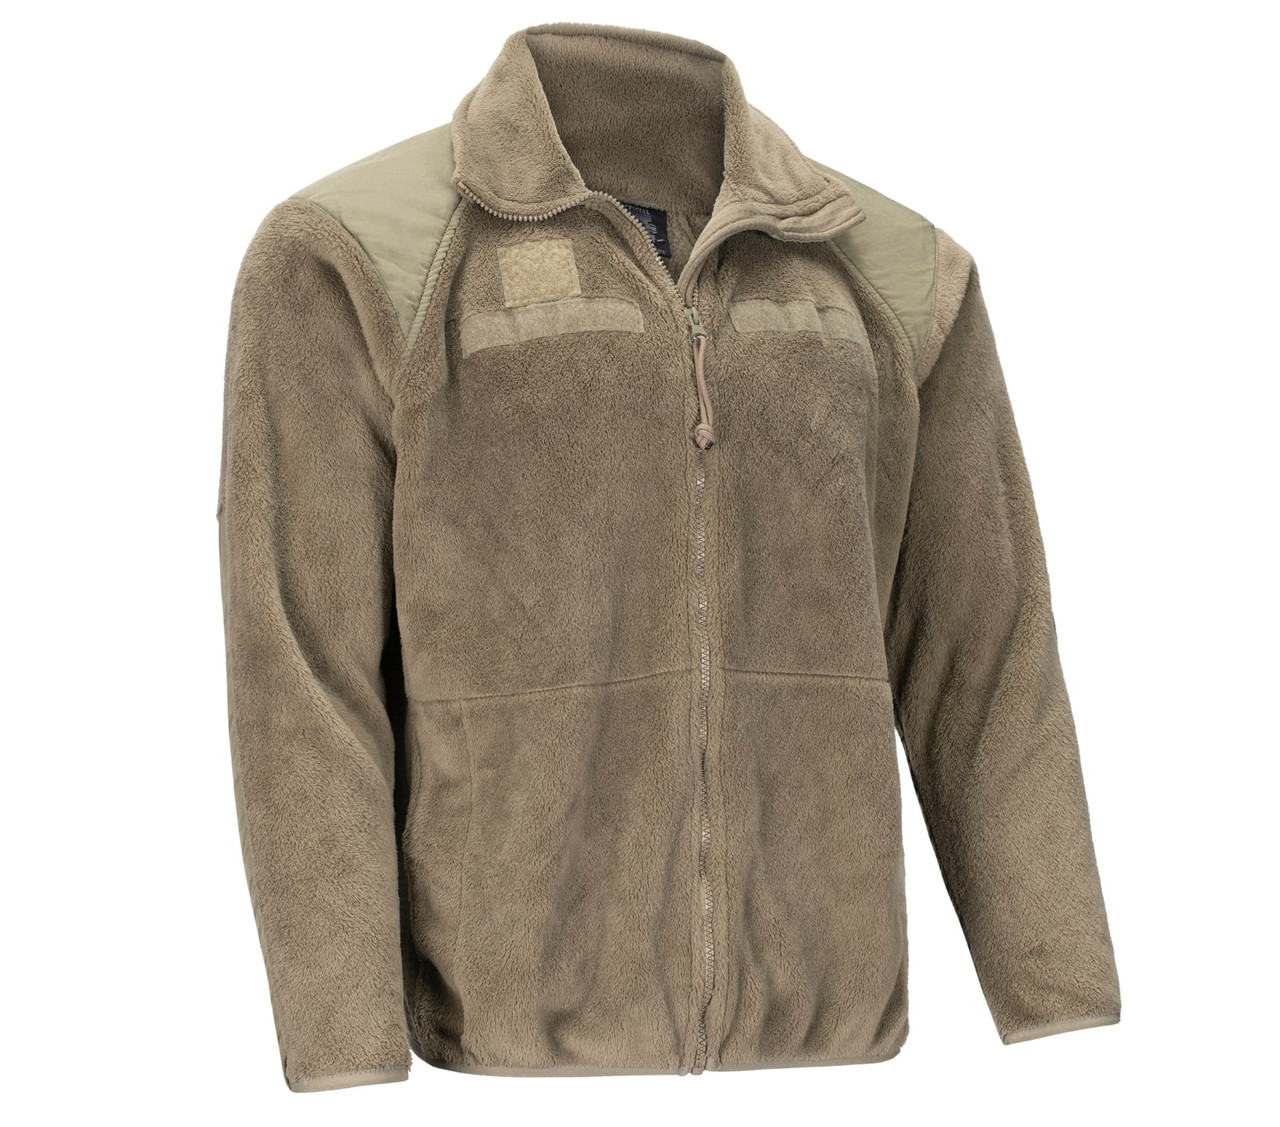 Army Issue Coyote Tan PolarTec fleece Jacket, Used